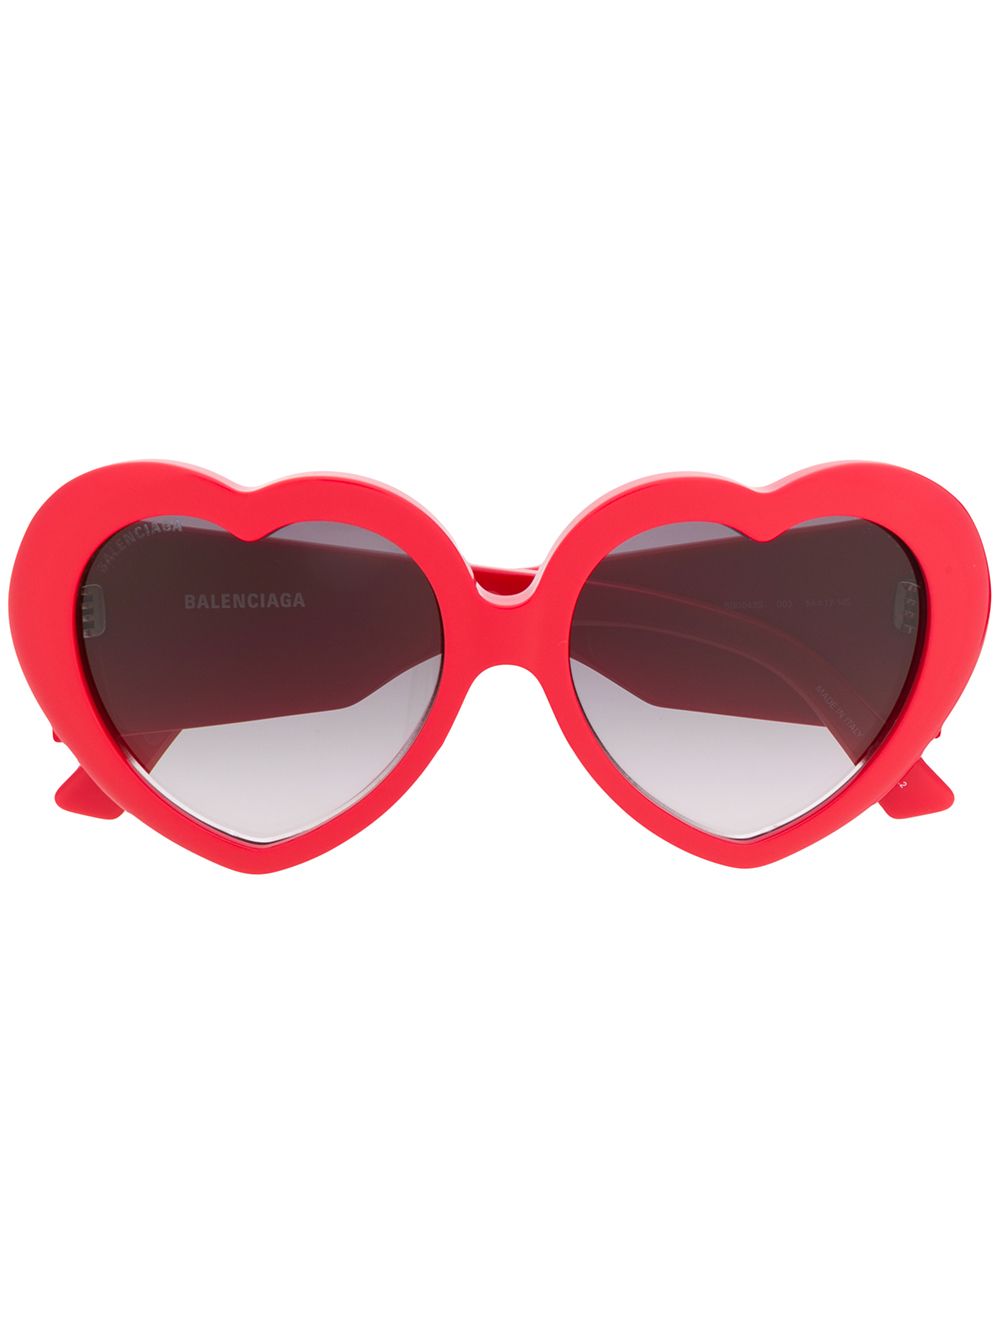 фото Balenciaga солнцезащитные очки Susi в оправе в форме сердца